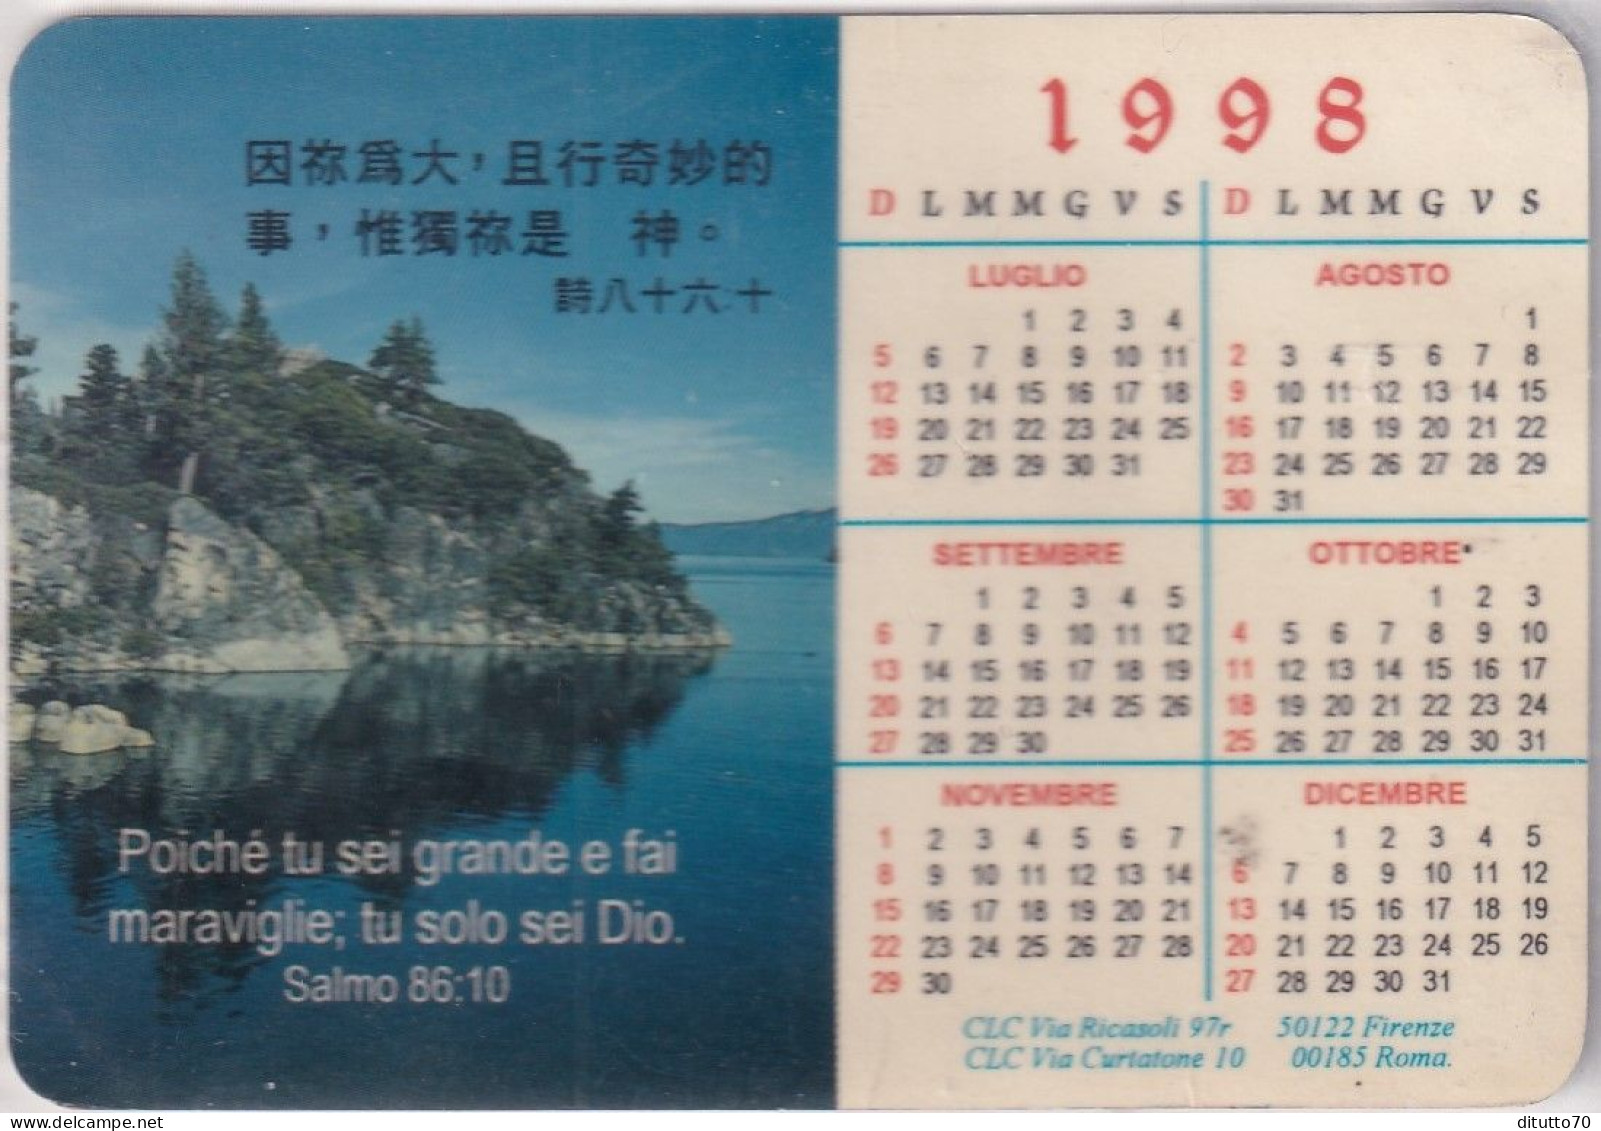 Calendarietto - Clc - Firenze - Roma - Anno 1998 - Petit Format : 1991-00